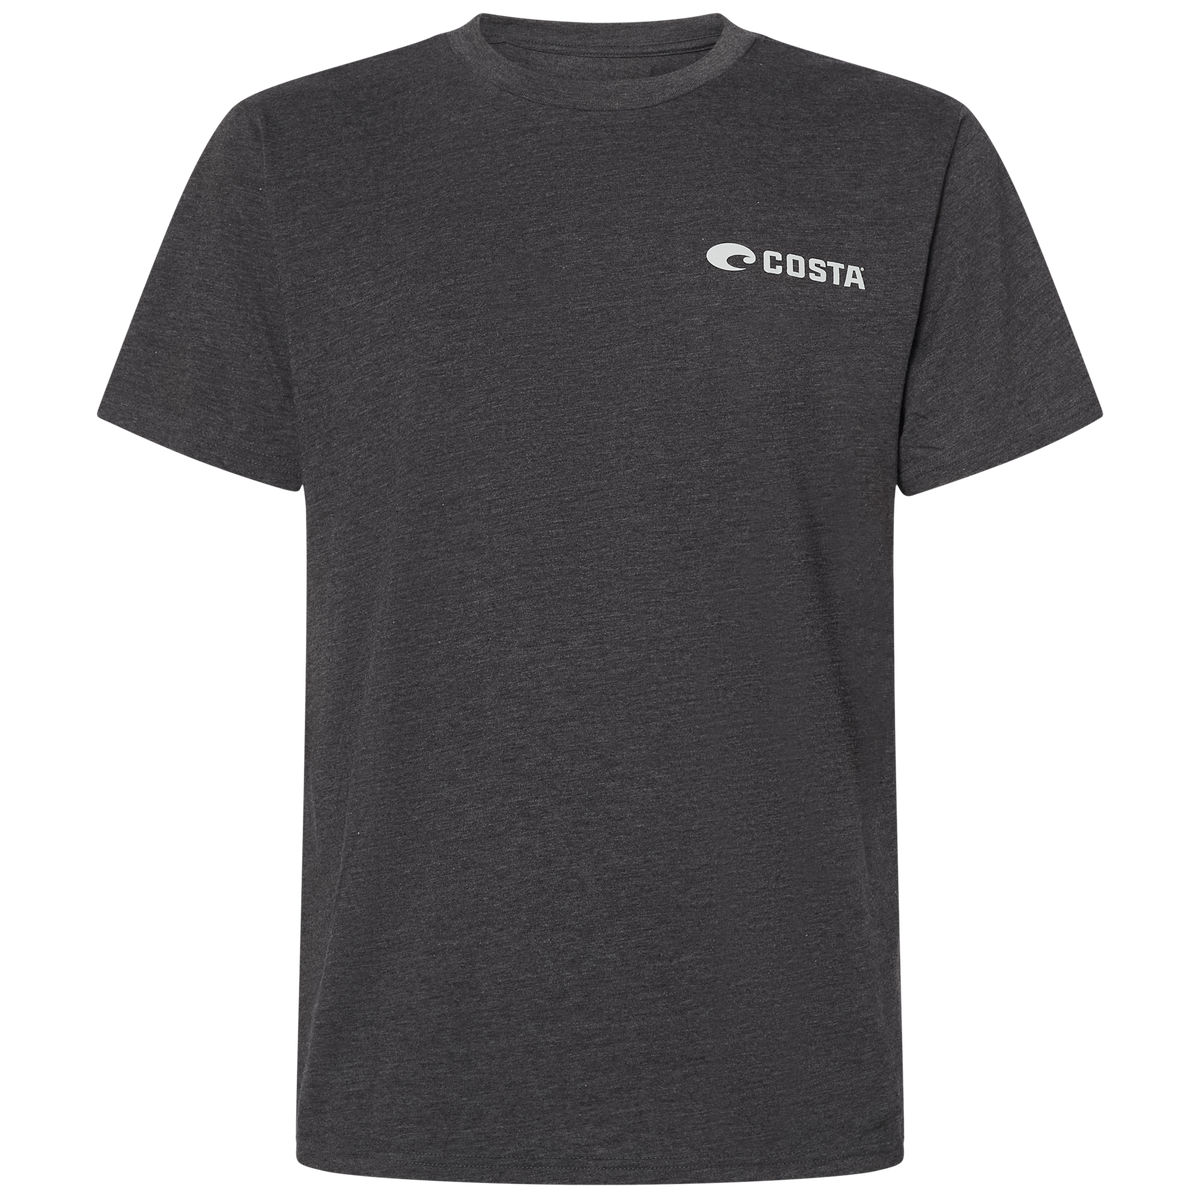 Costa Emblem Marlin Crew Short Sleeve T-Shirt